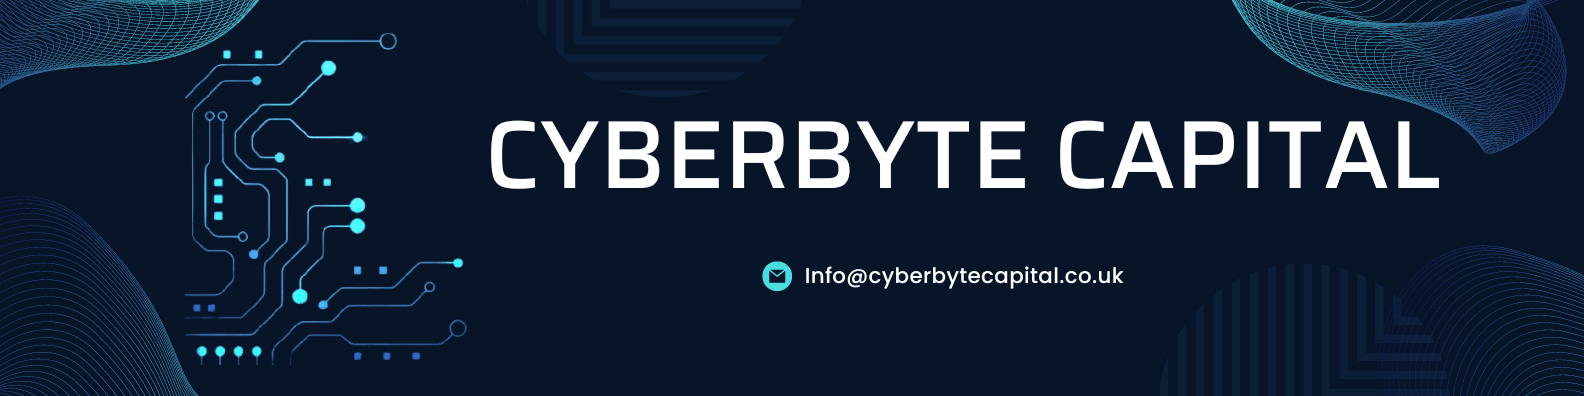 CyberByte-Capital banner